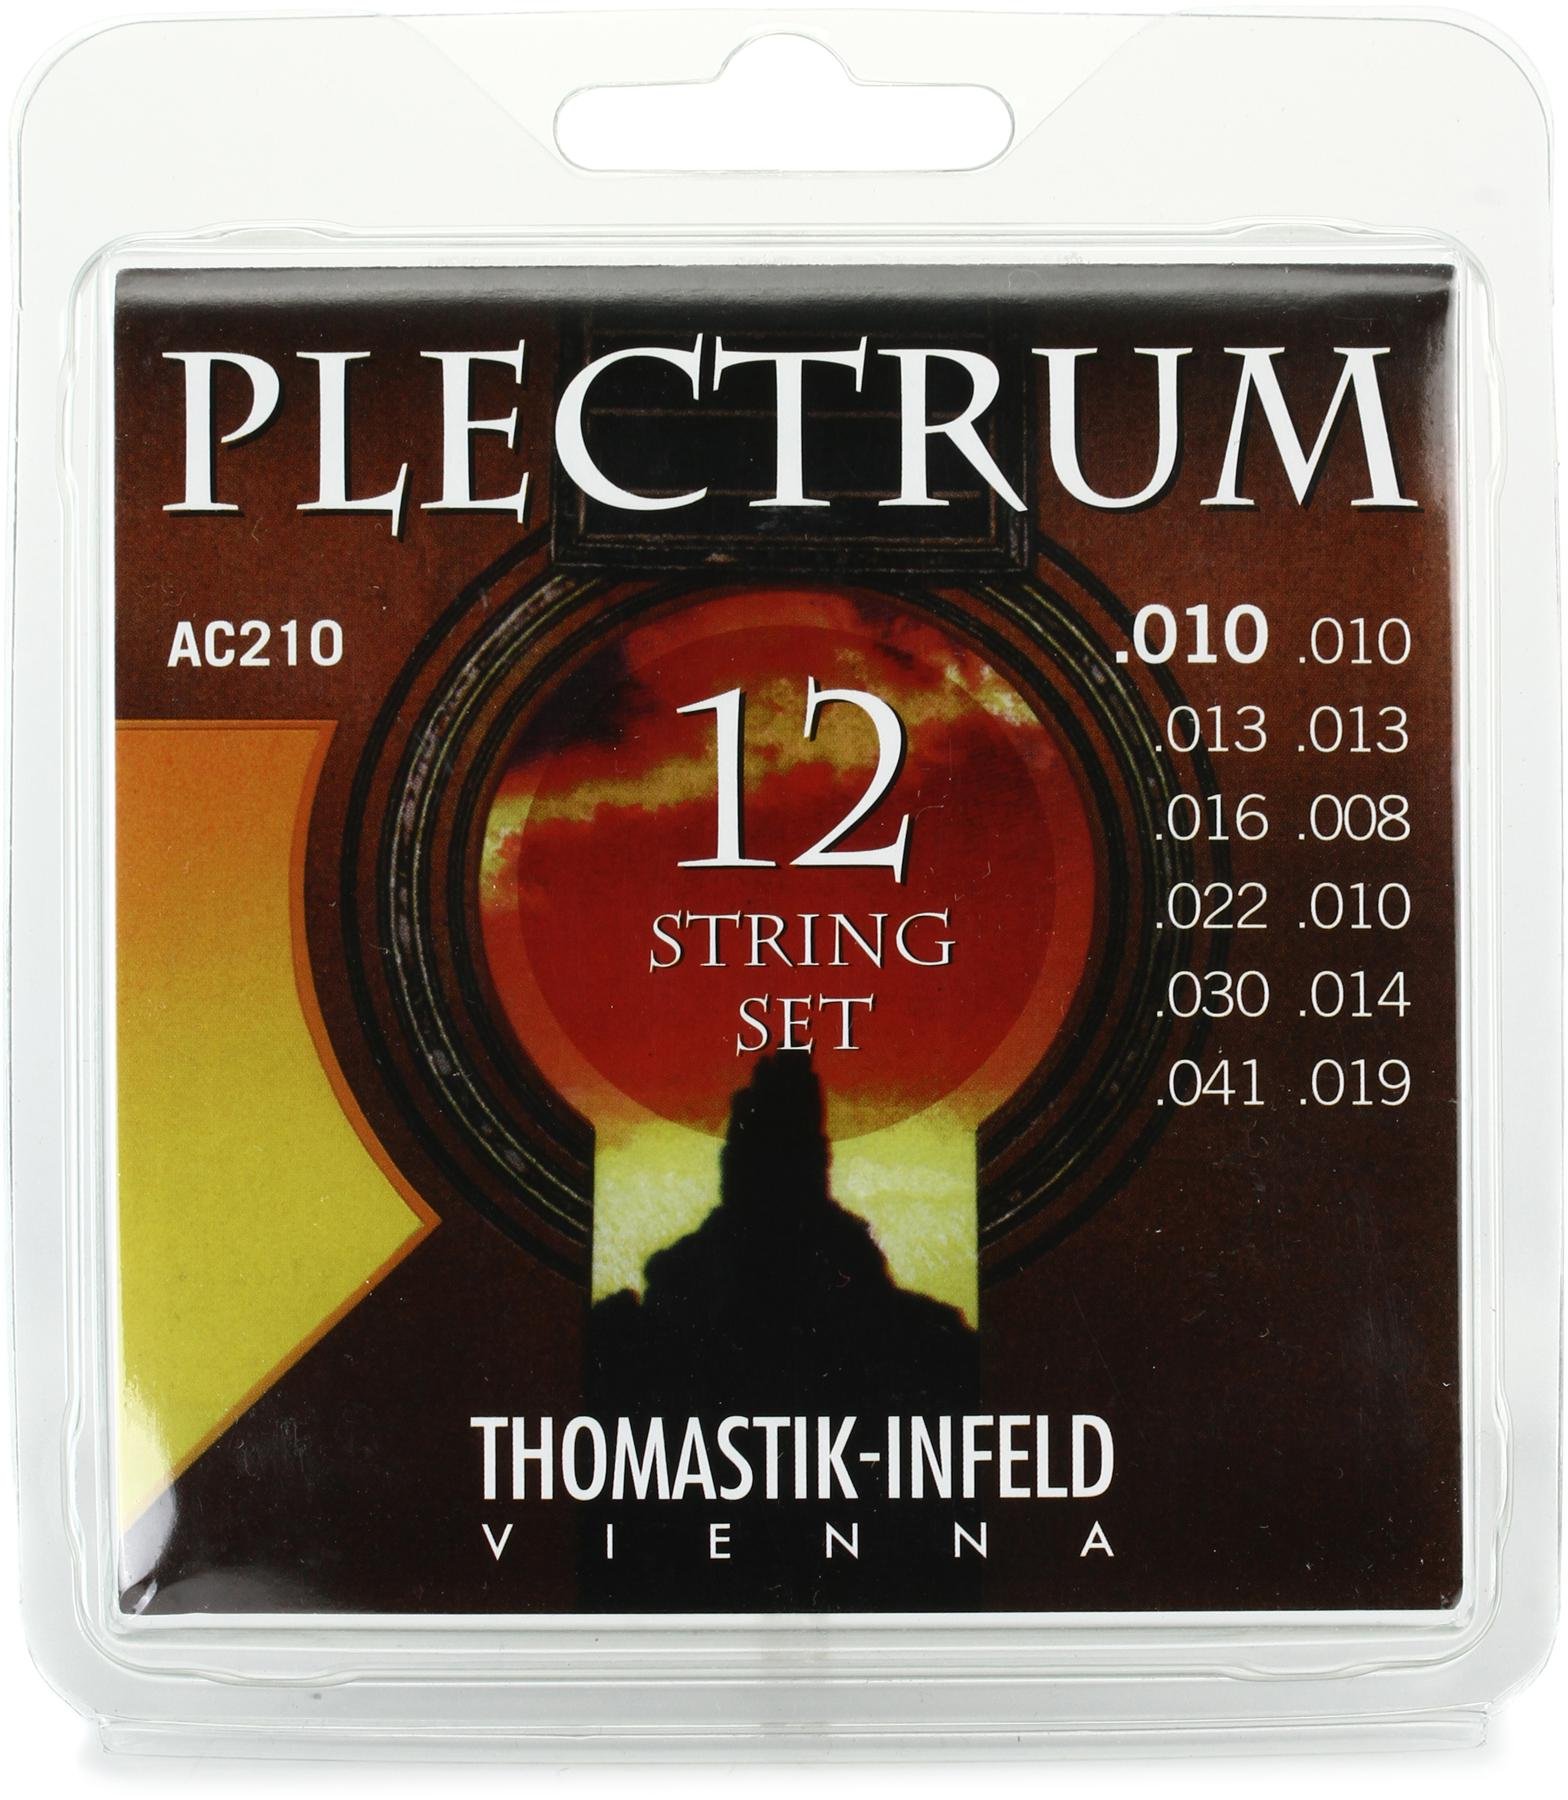 Thomastik-Infeld AC210 Plectrum Acoustic Guitar Strings - .010 